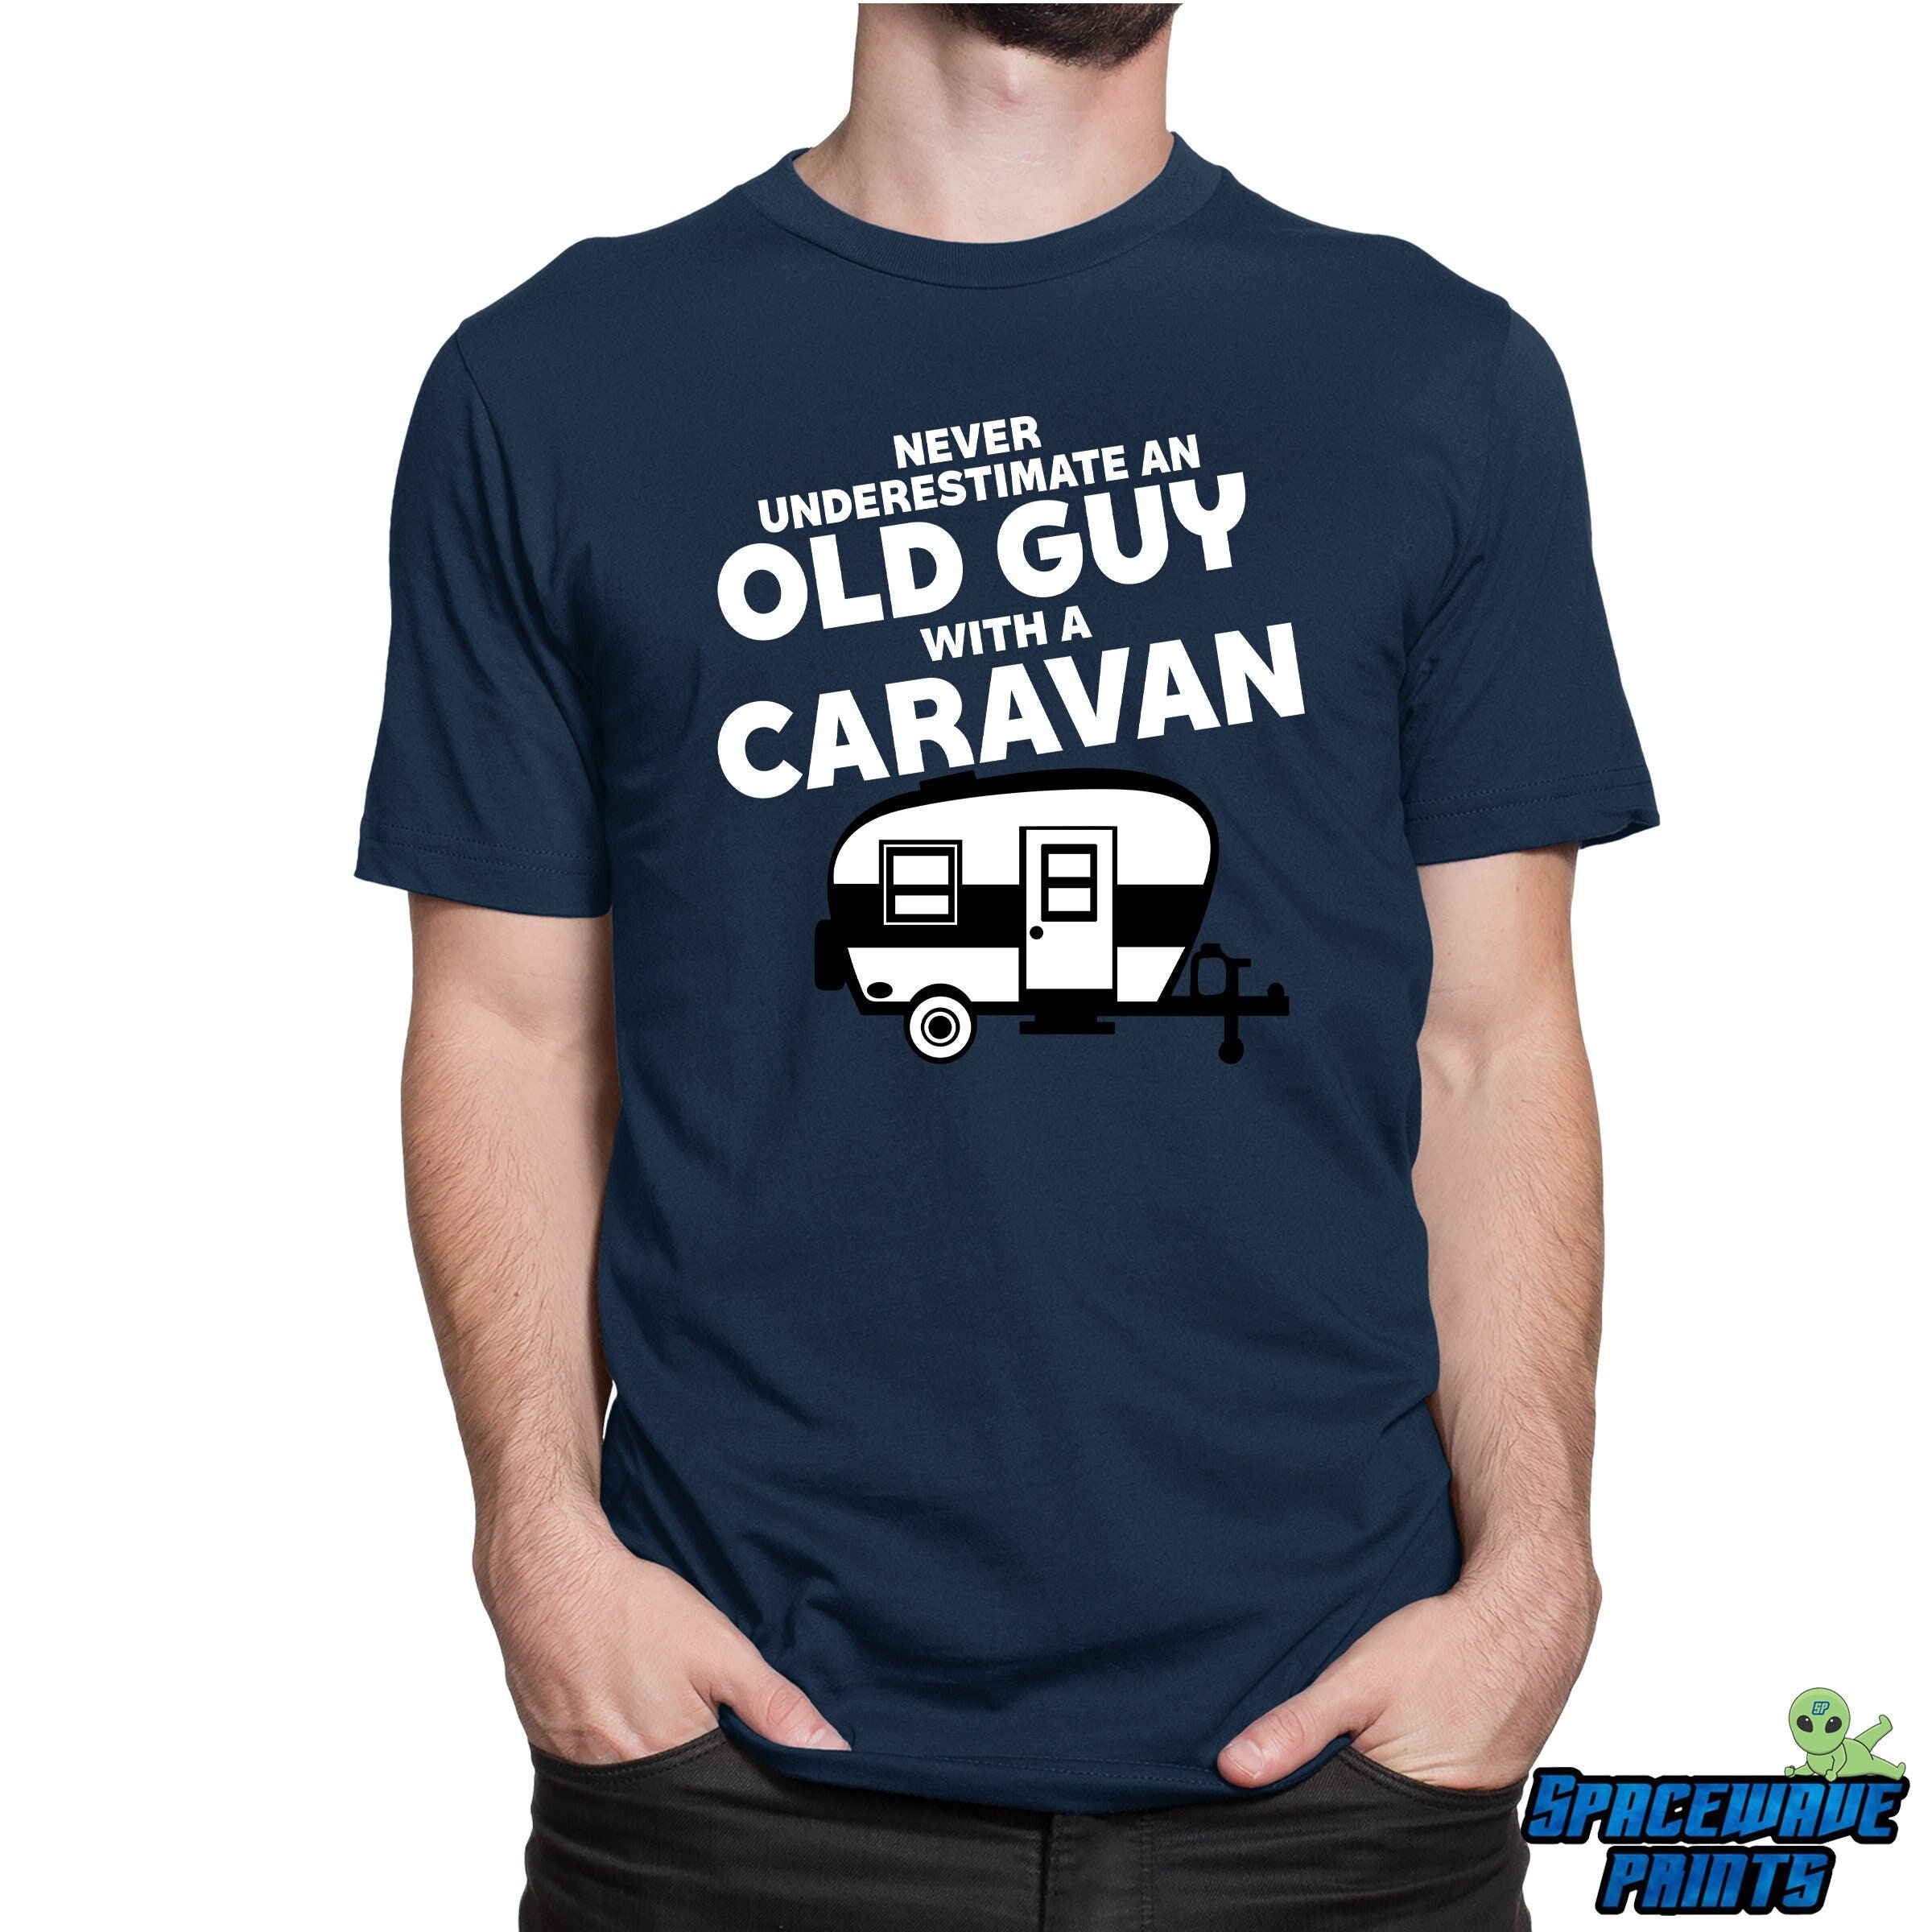 Caravan Tshirt 